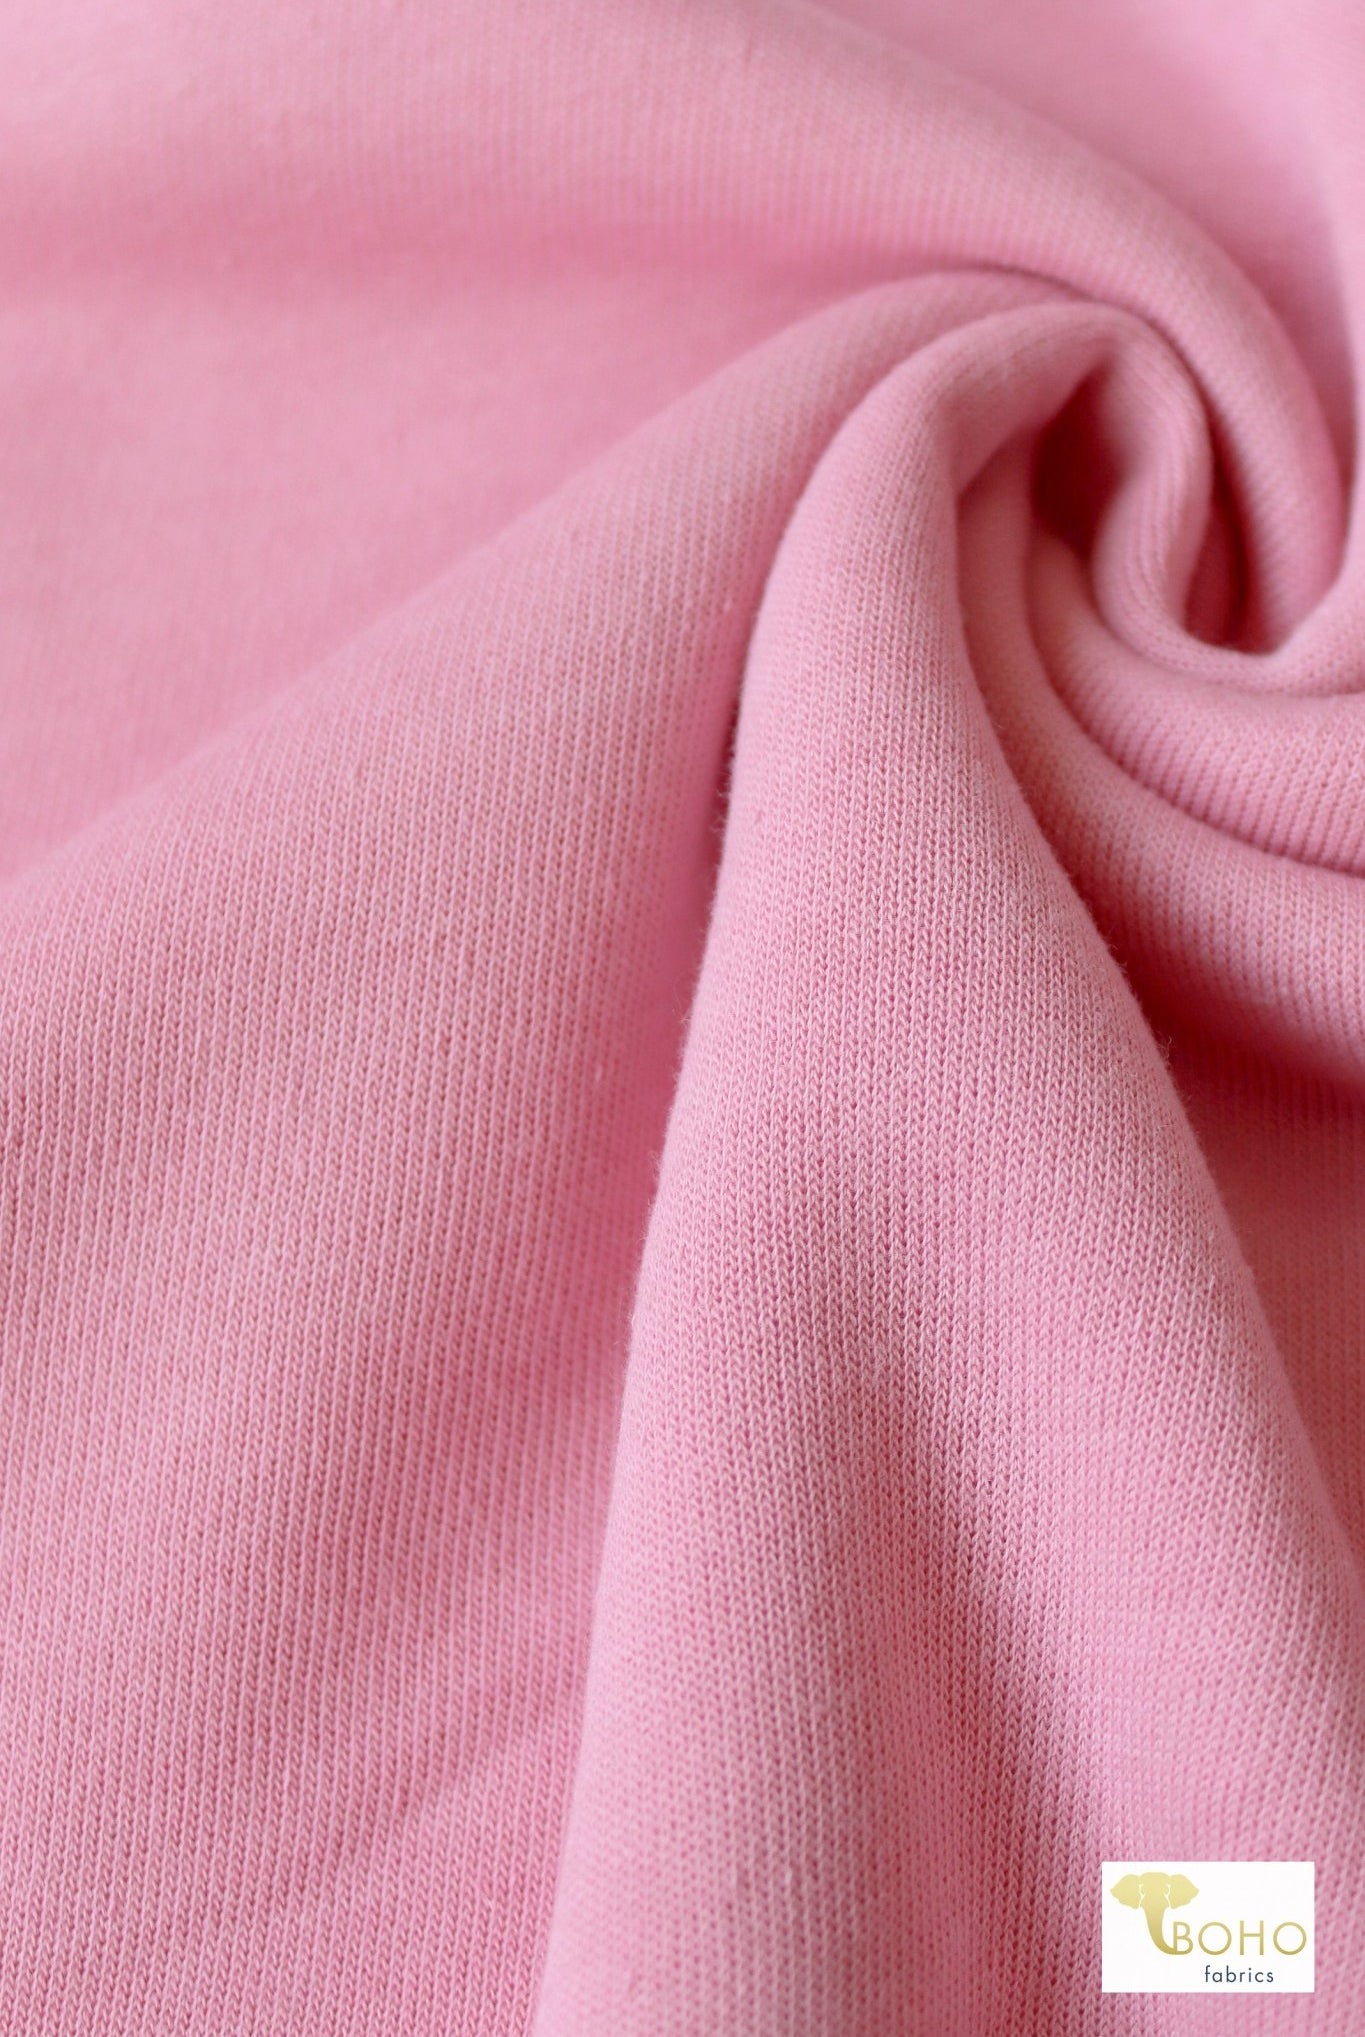 1x1 Rib Knit, Blossom Light Pink. SOLD BY THE HALF YARD! - Boho Fabrics